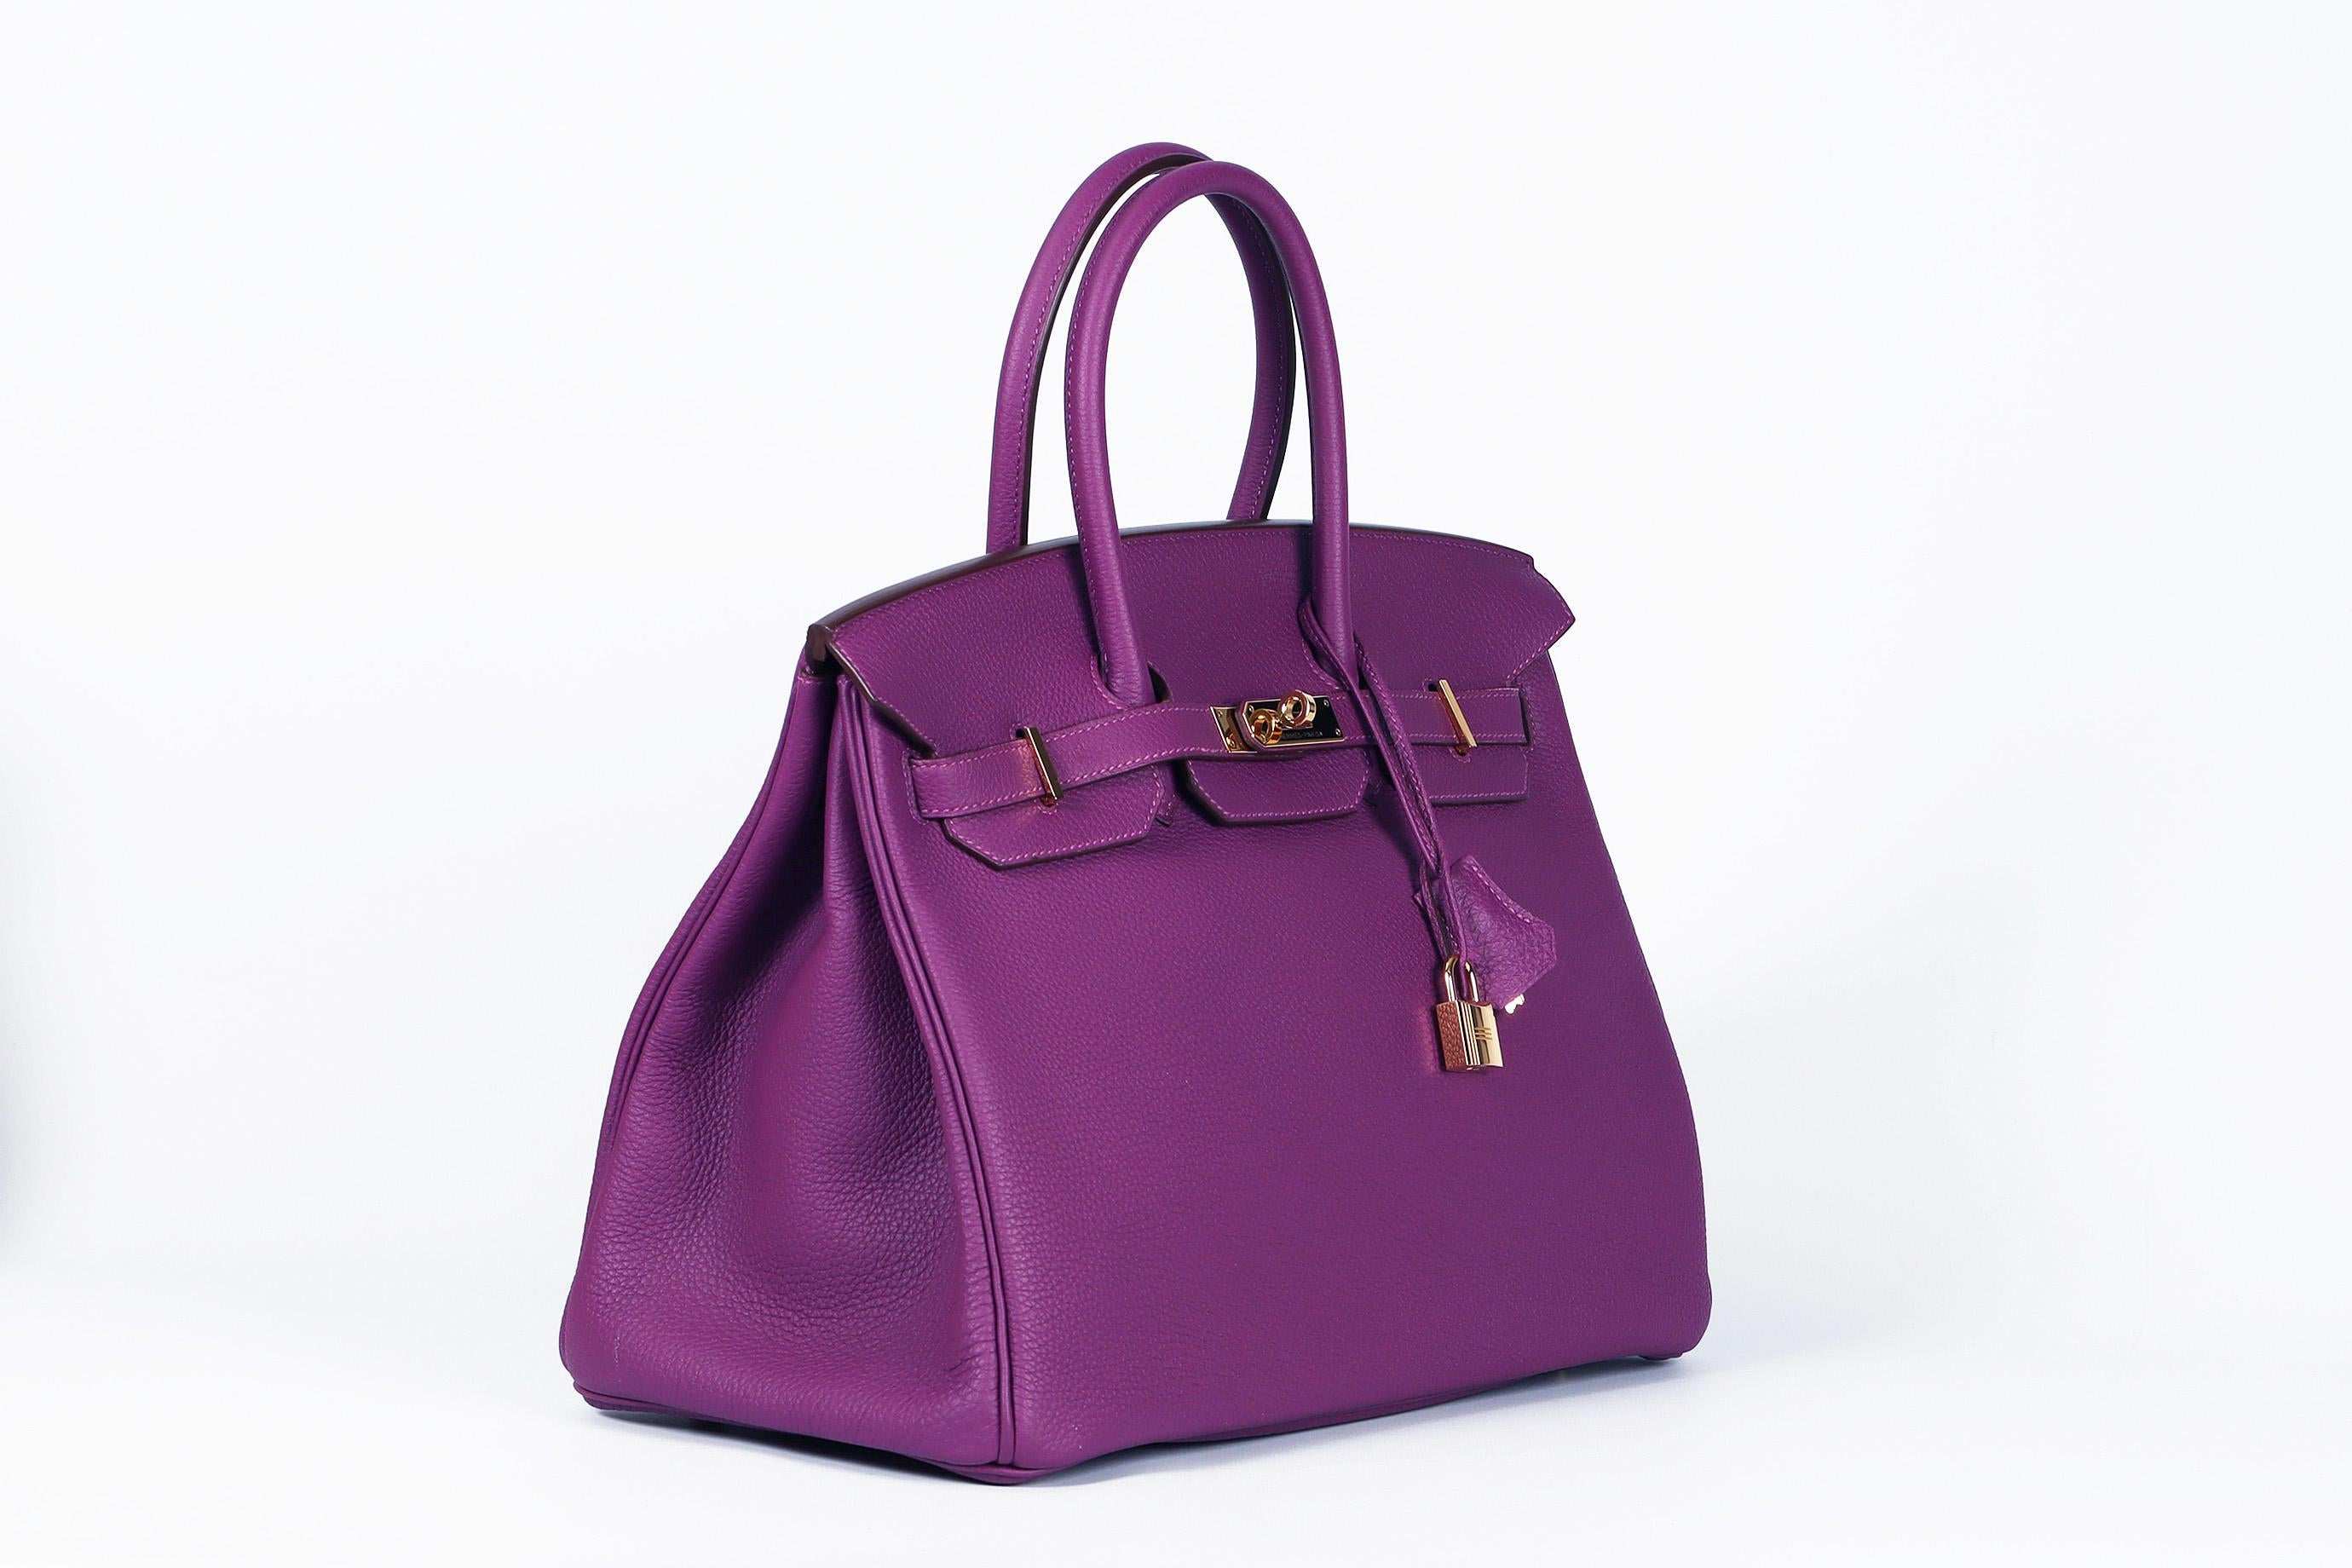 Hermès 2014 Birkin 35cm Togo Leather Bag For Sale 2